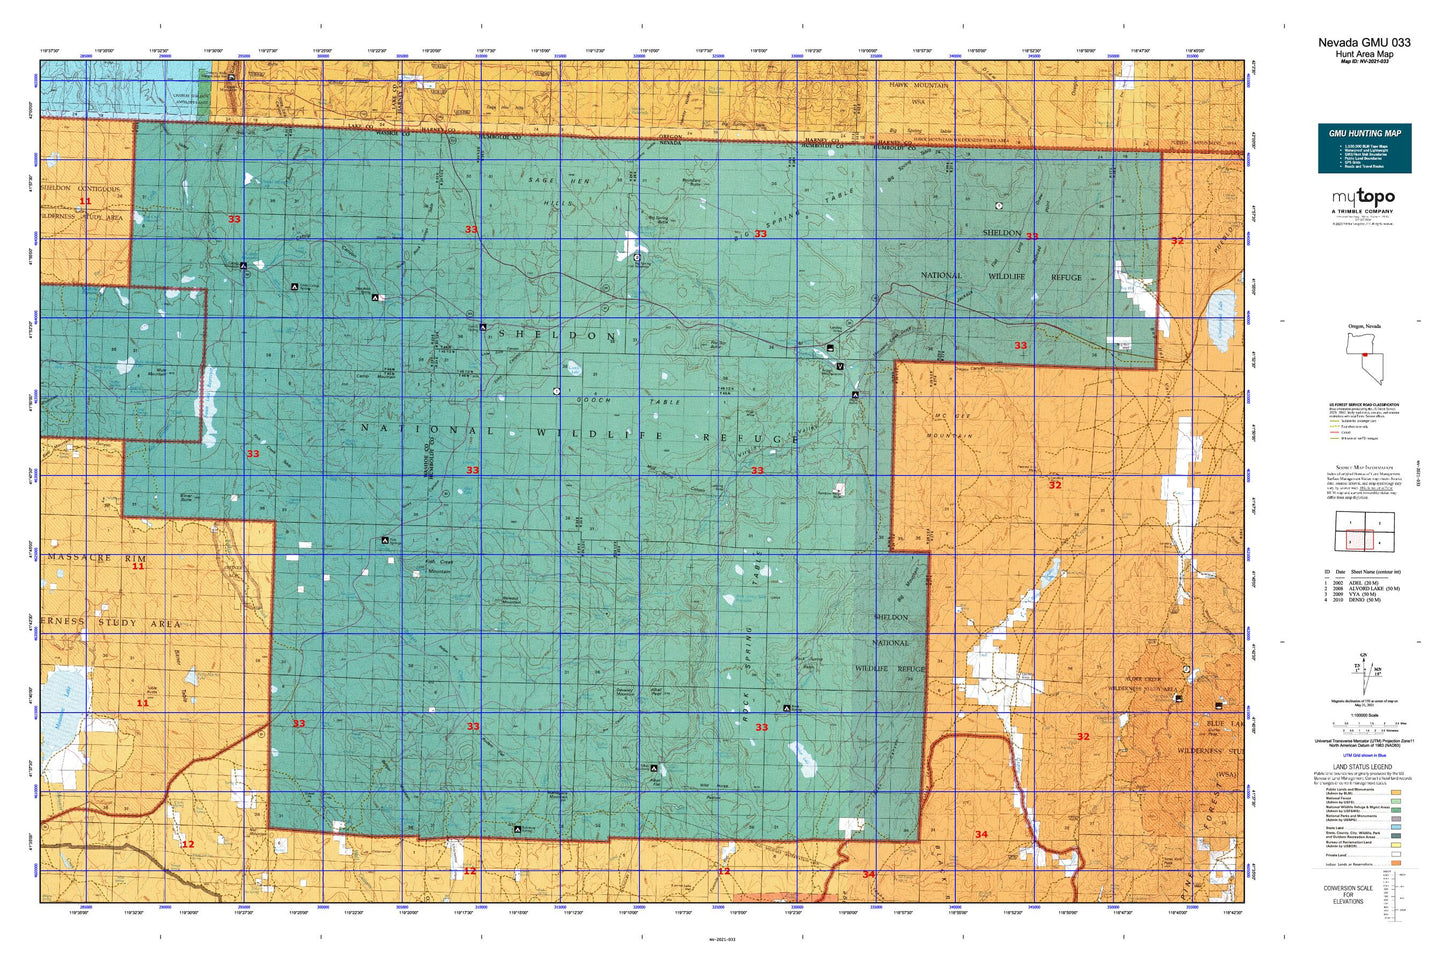 Nevada GMU 033 Map Image